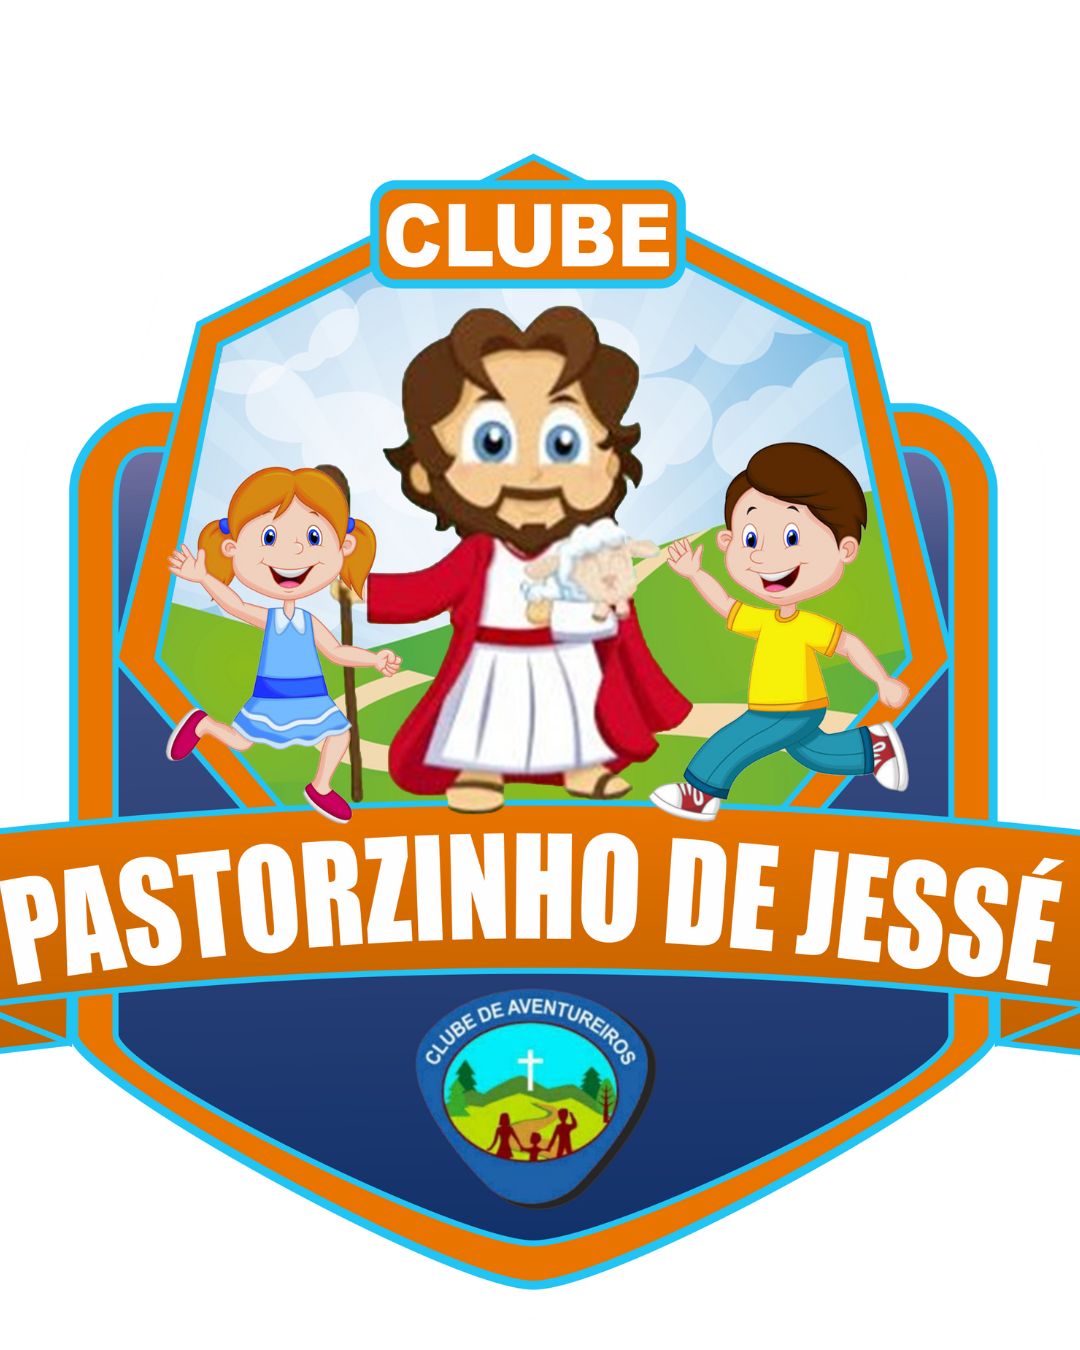 PASTORZINHO DE JESSÉ